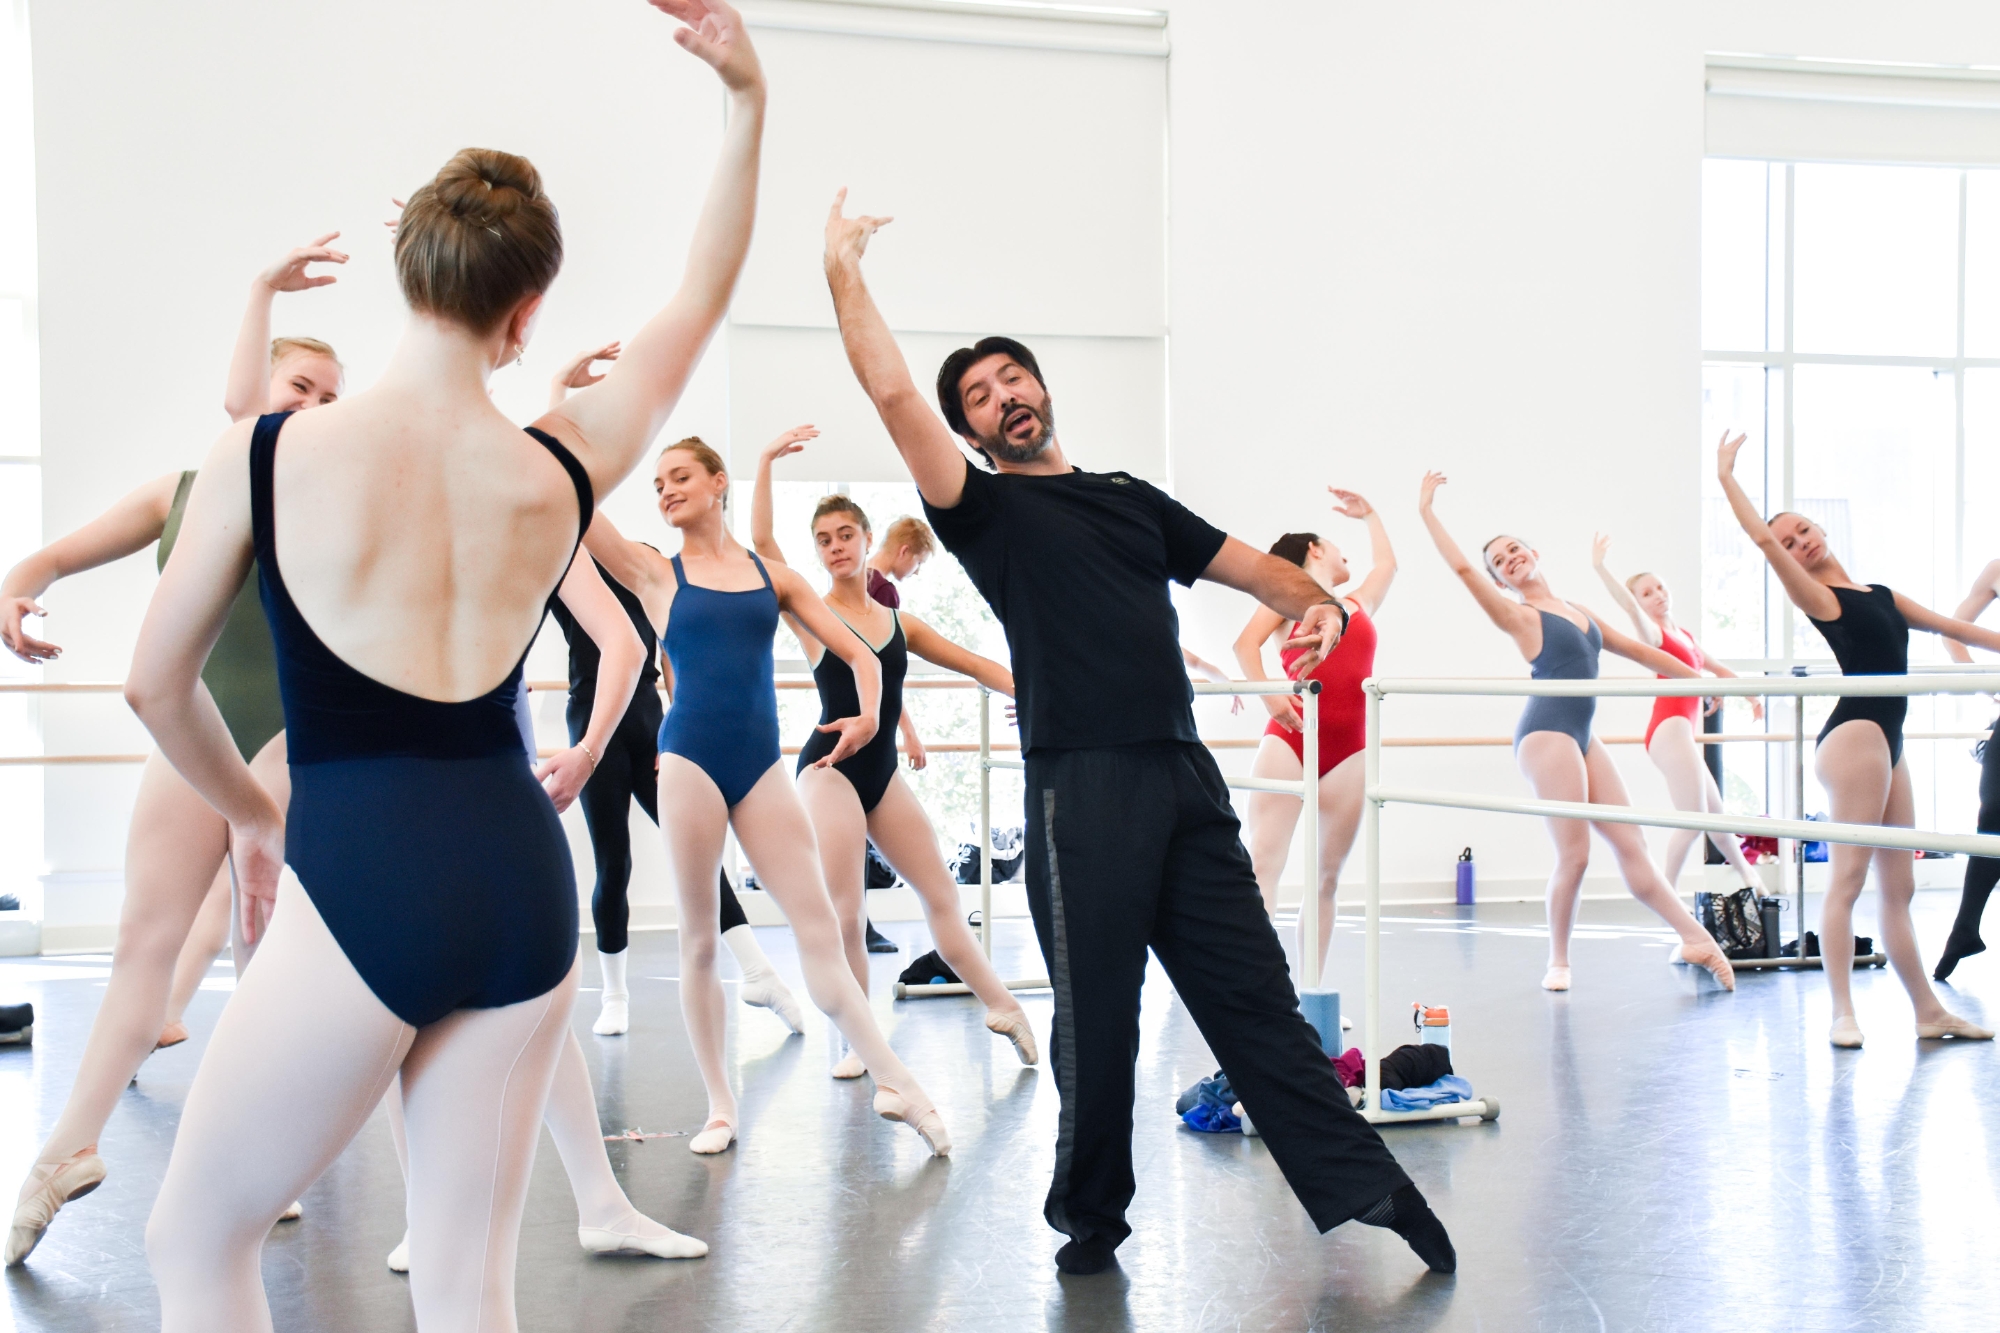 Instructor teaches ballet